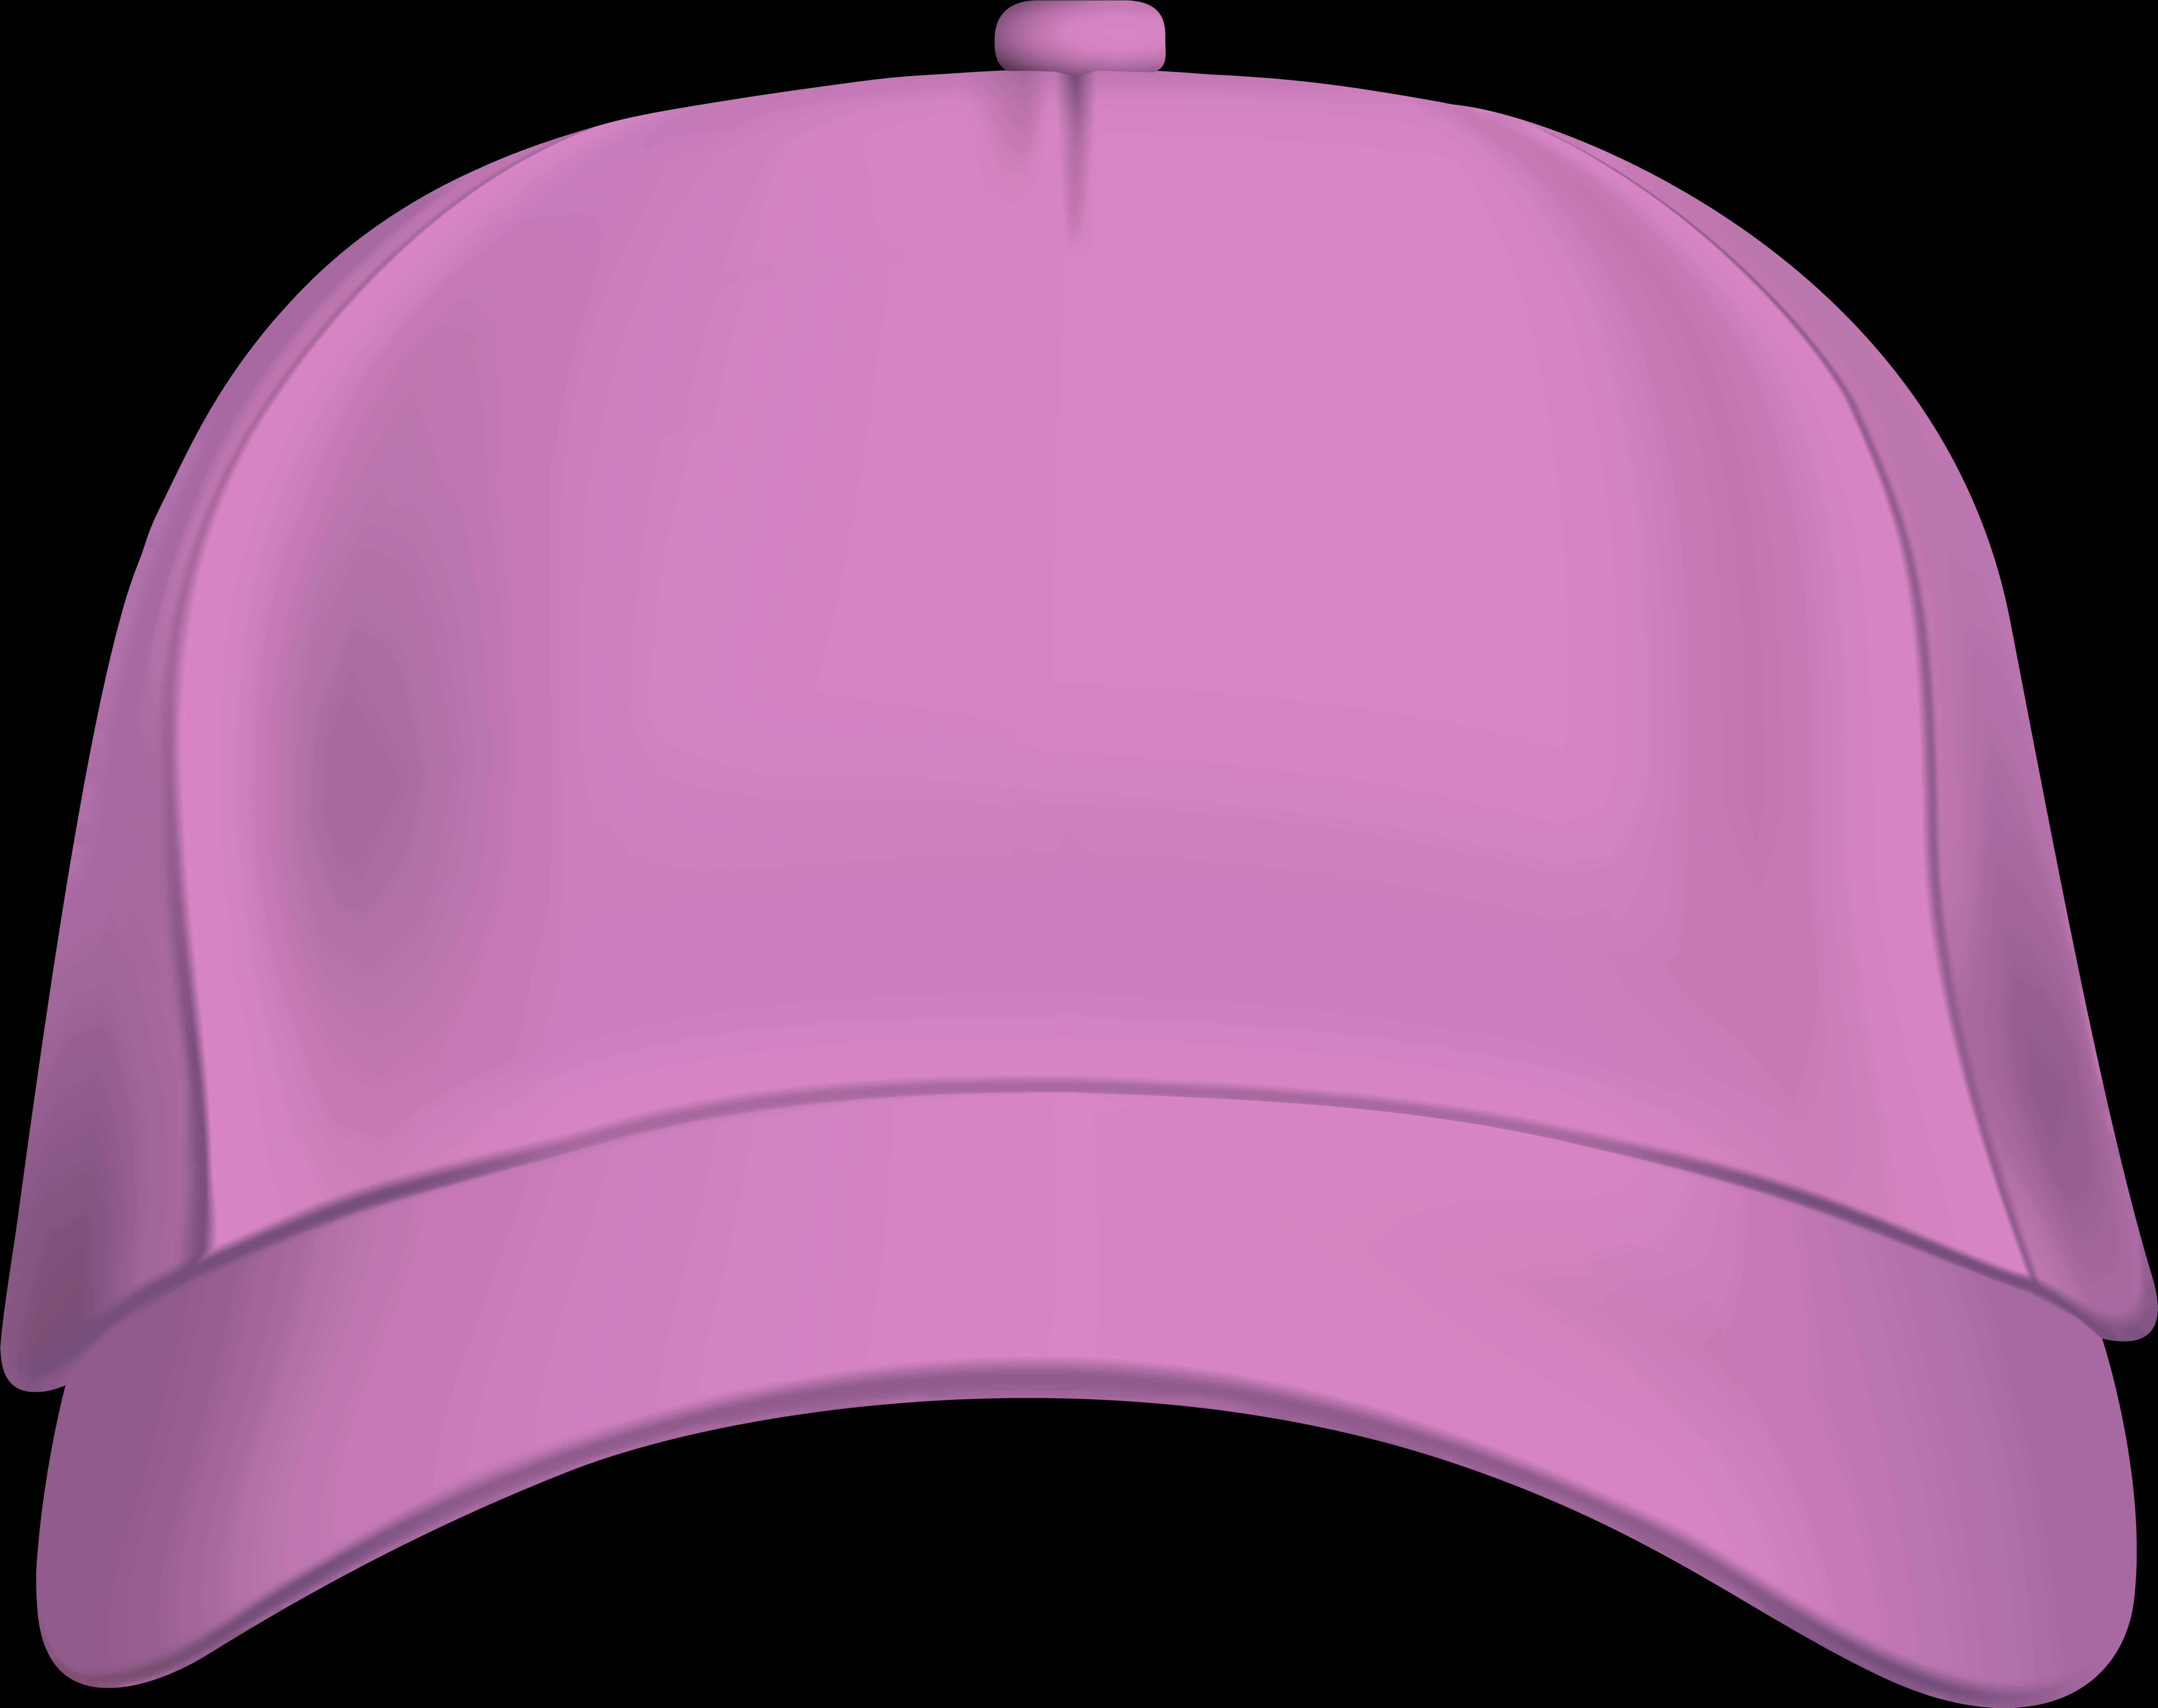 Pink Baseball Cap3 D Render.jpg PNG image